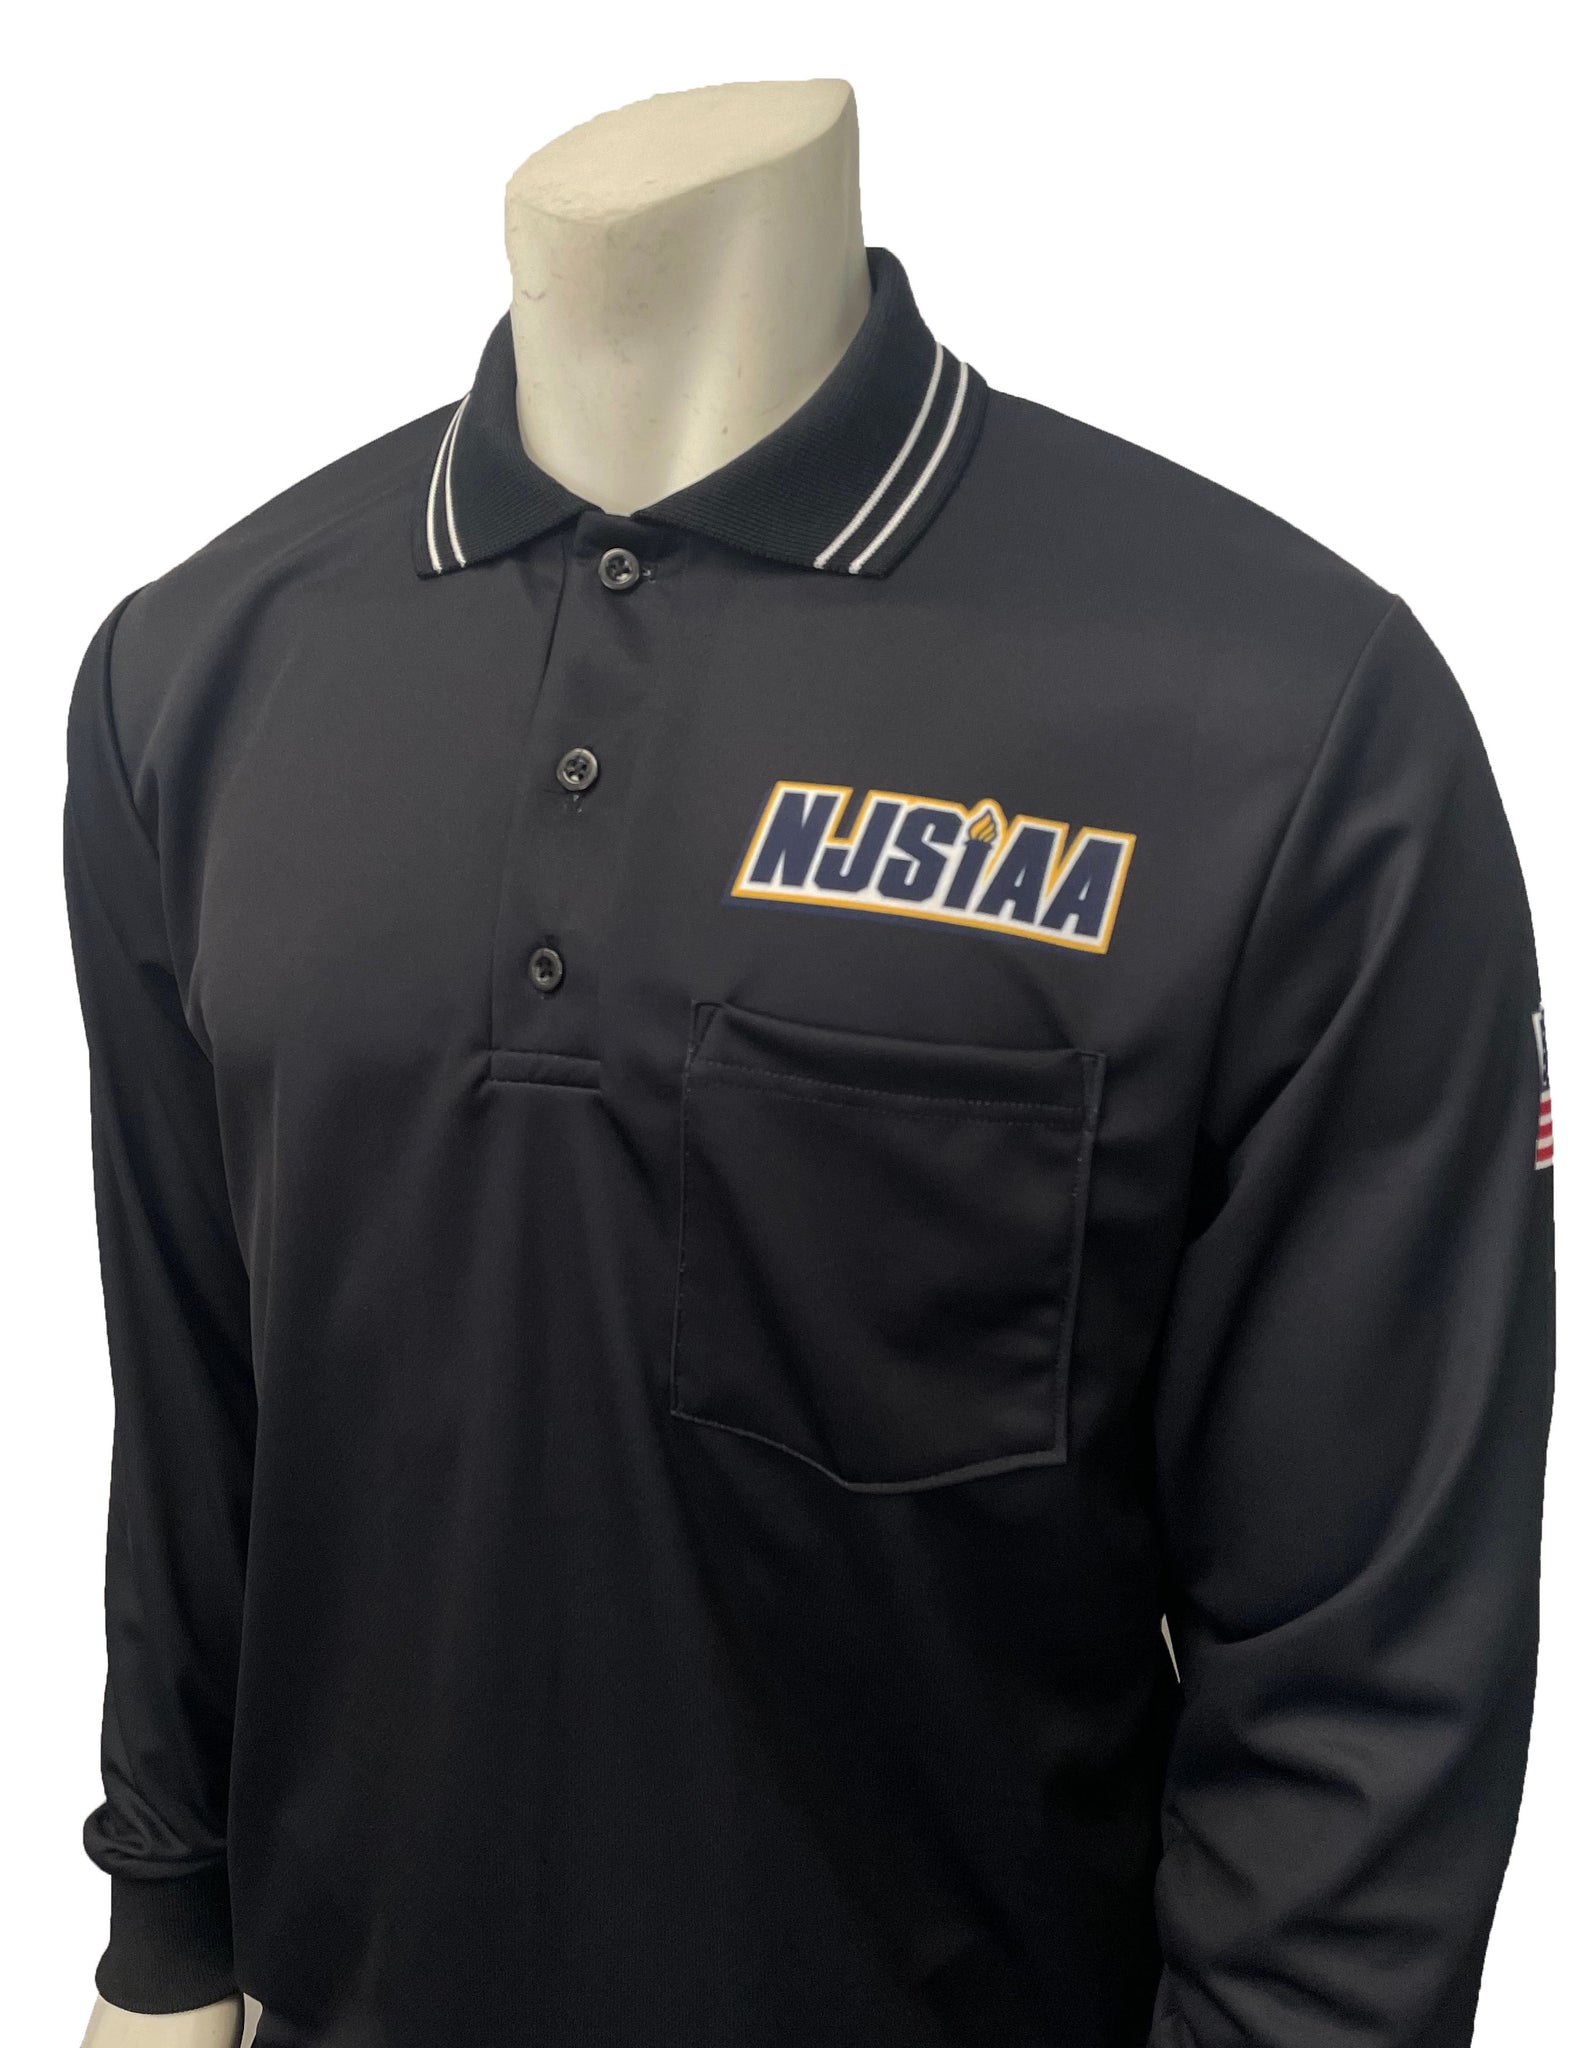 USA301NJ-BLK - Smitty "Made in USA" - NJSIAA Men's Baseball/Softball Umpire Long Sleeve Shirt - Black